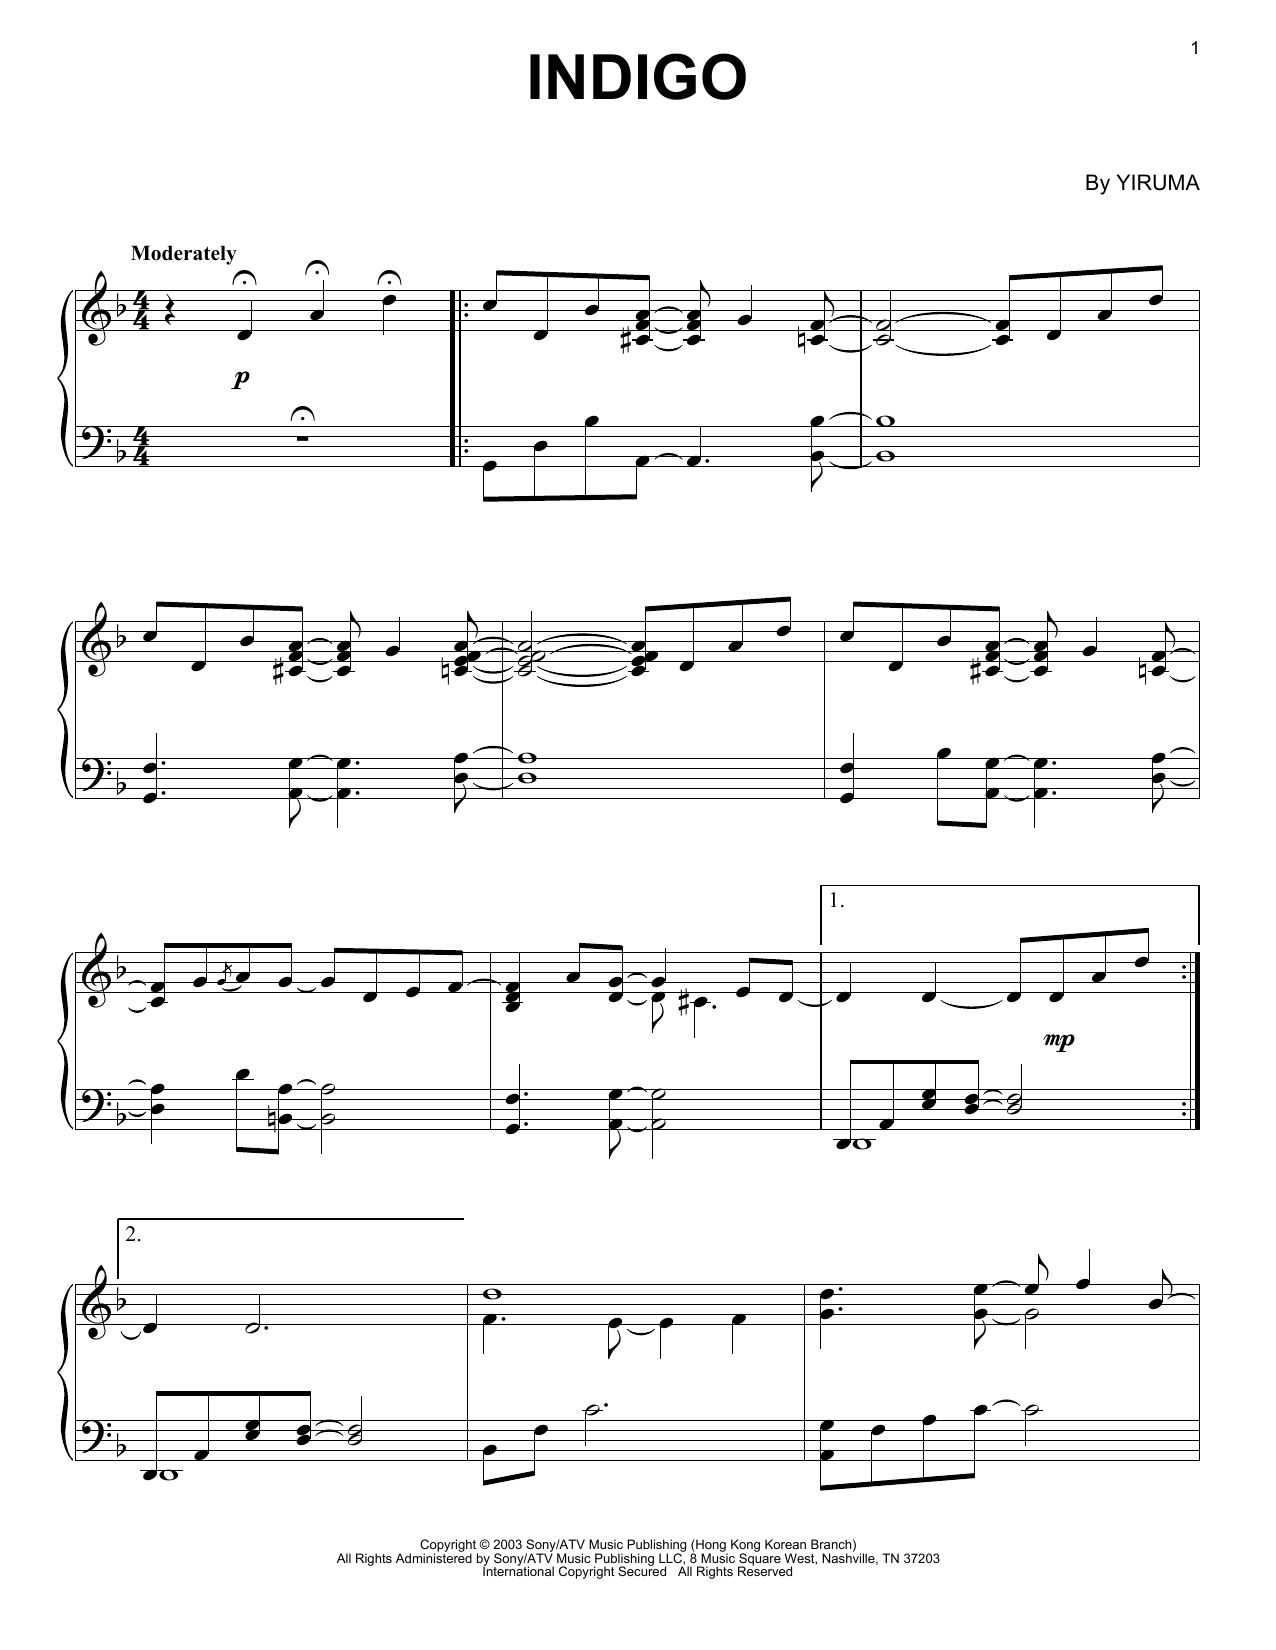 Yiruma Indigo Sheet Music Notes & Chords for Easy Piano - Download or Print PDF